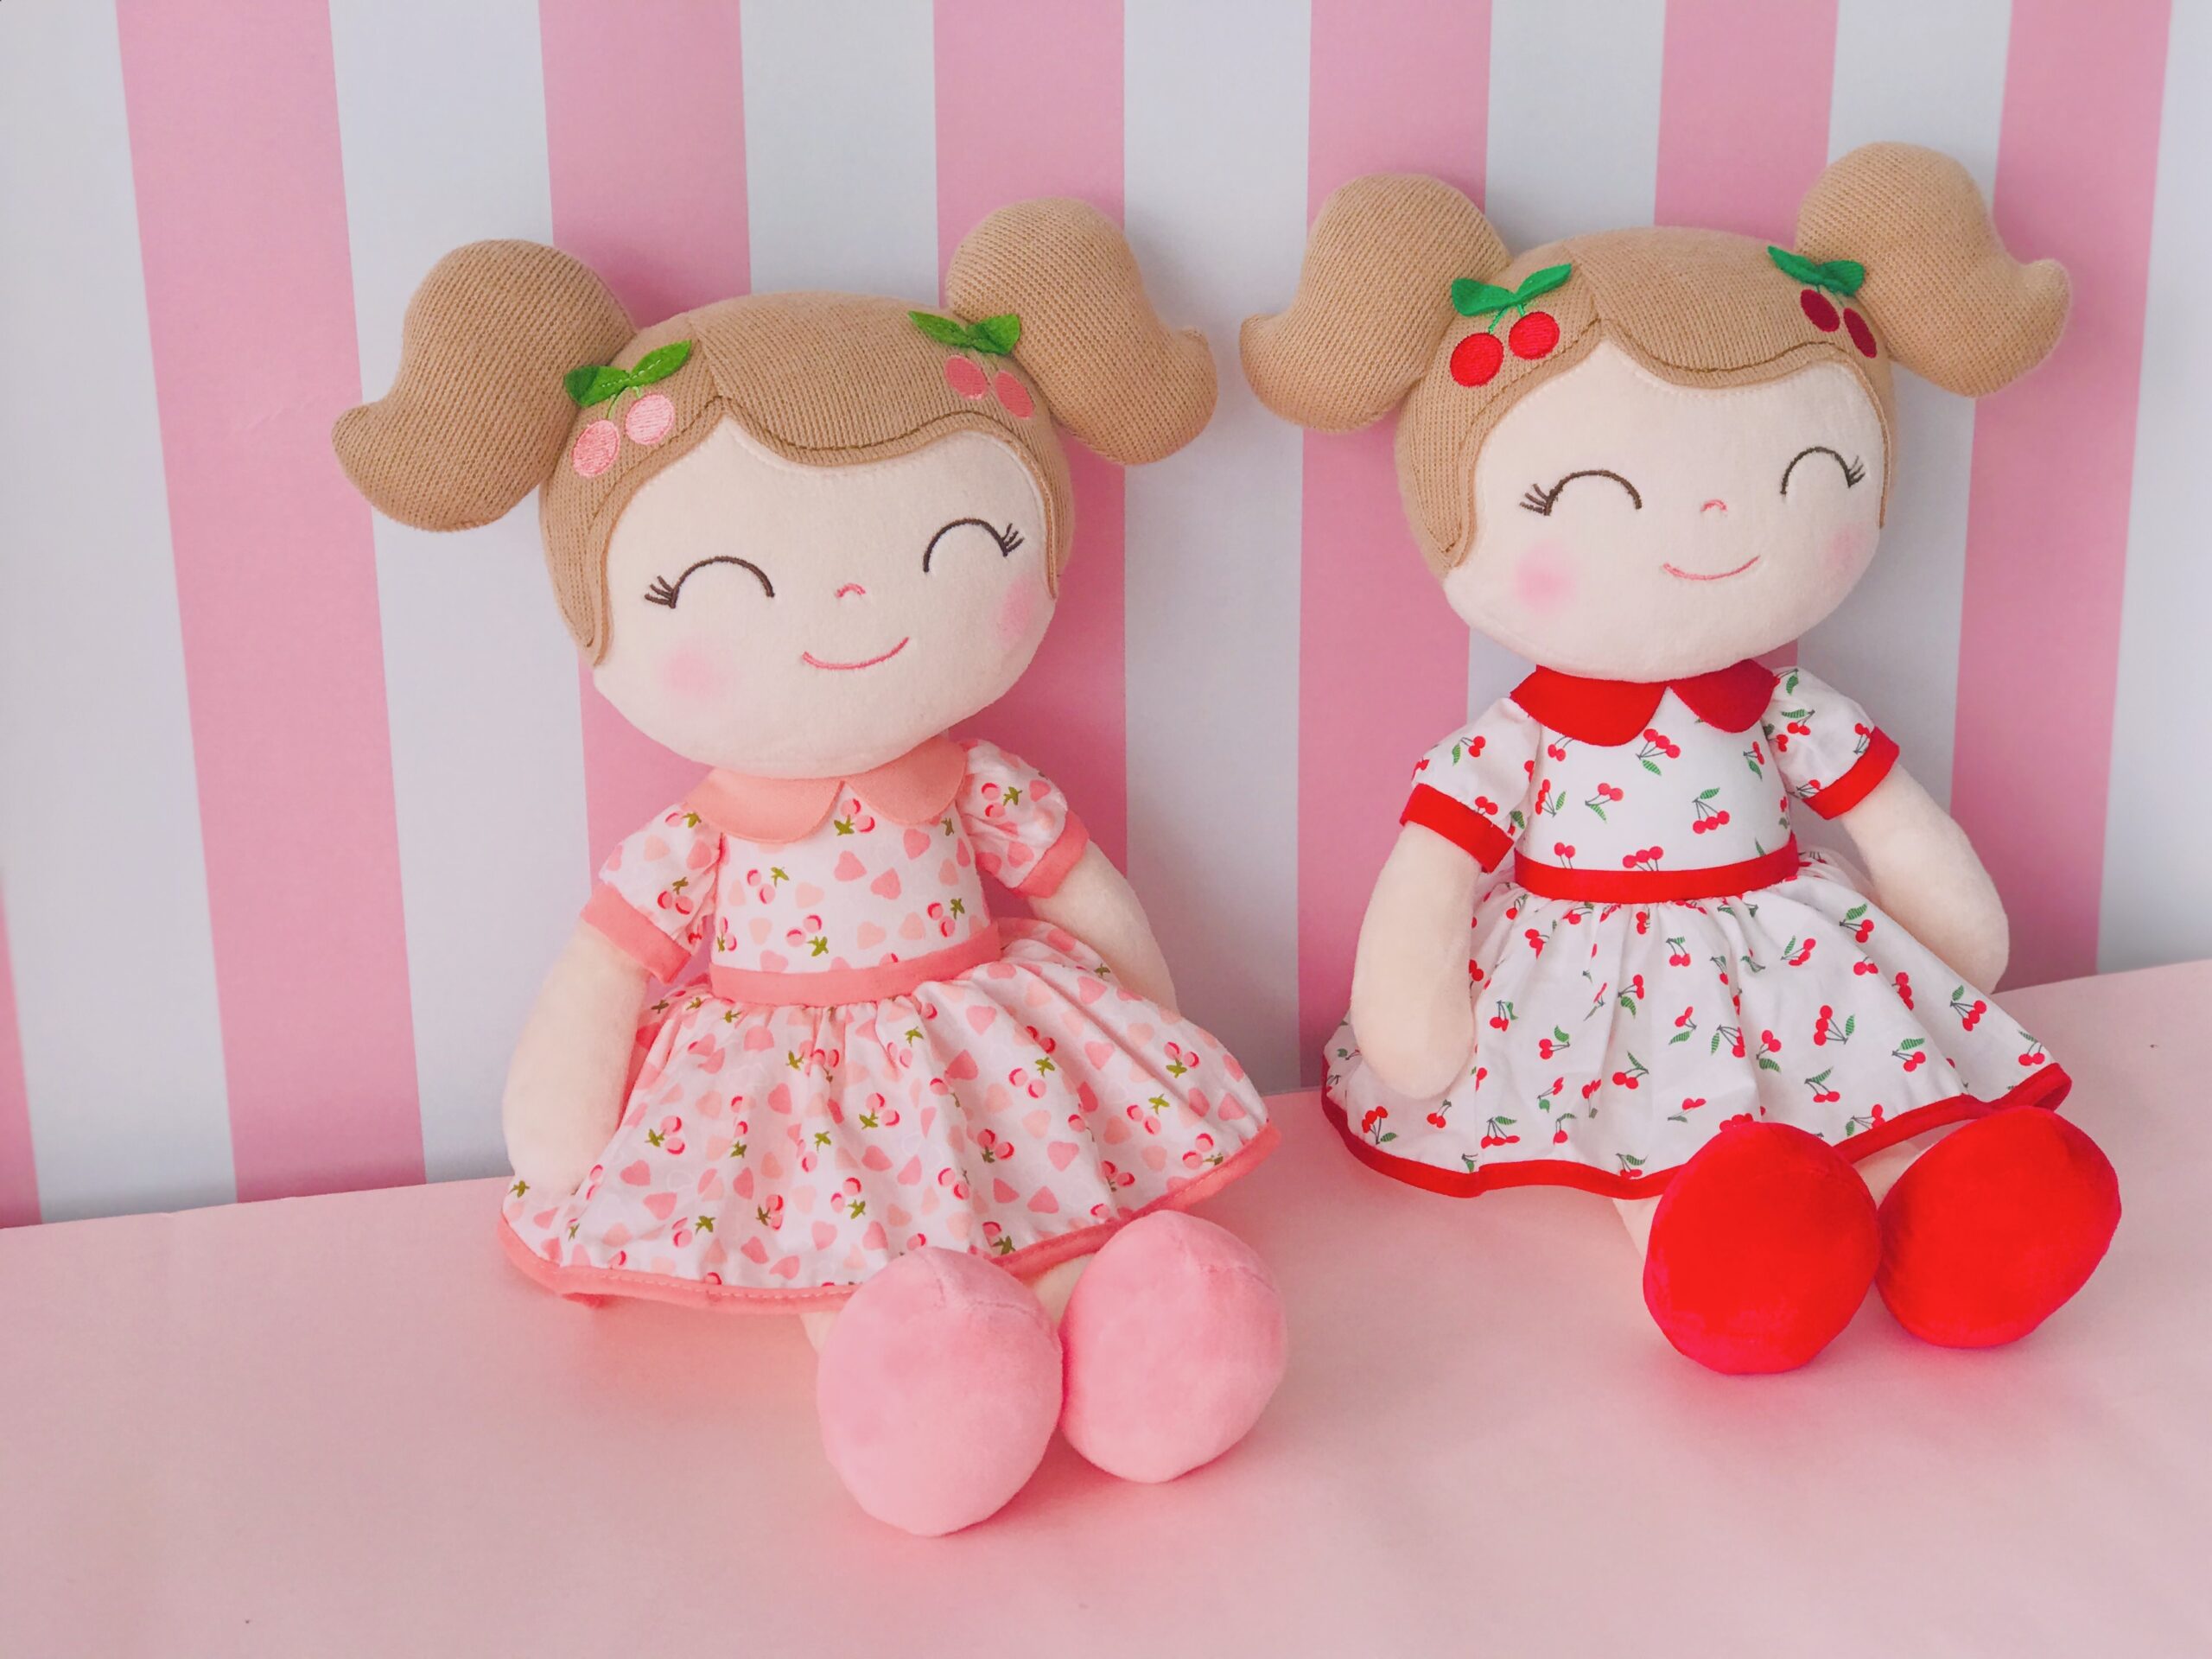 Gloveleya Stuffed Toys Cherry Girl Plush Doll Baby Girl Gifts Cloth Dolls Kids Rag Toy Toddler Plush Toys